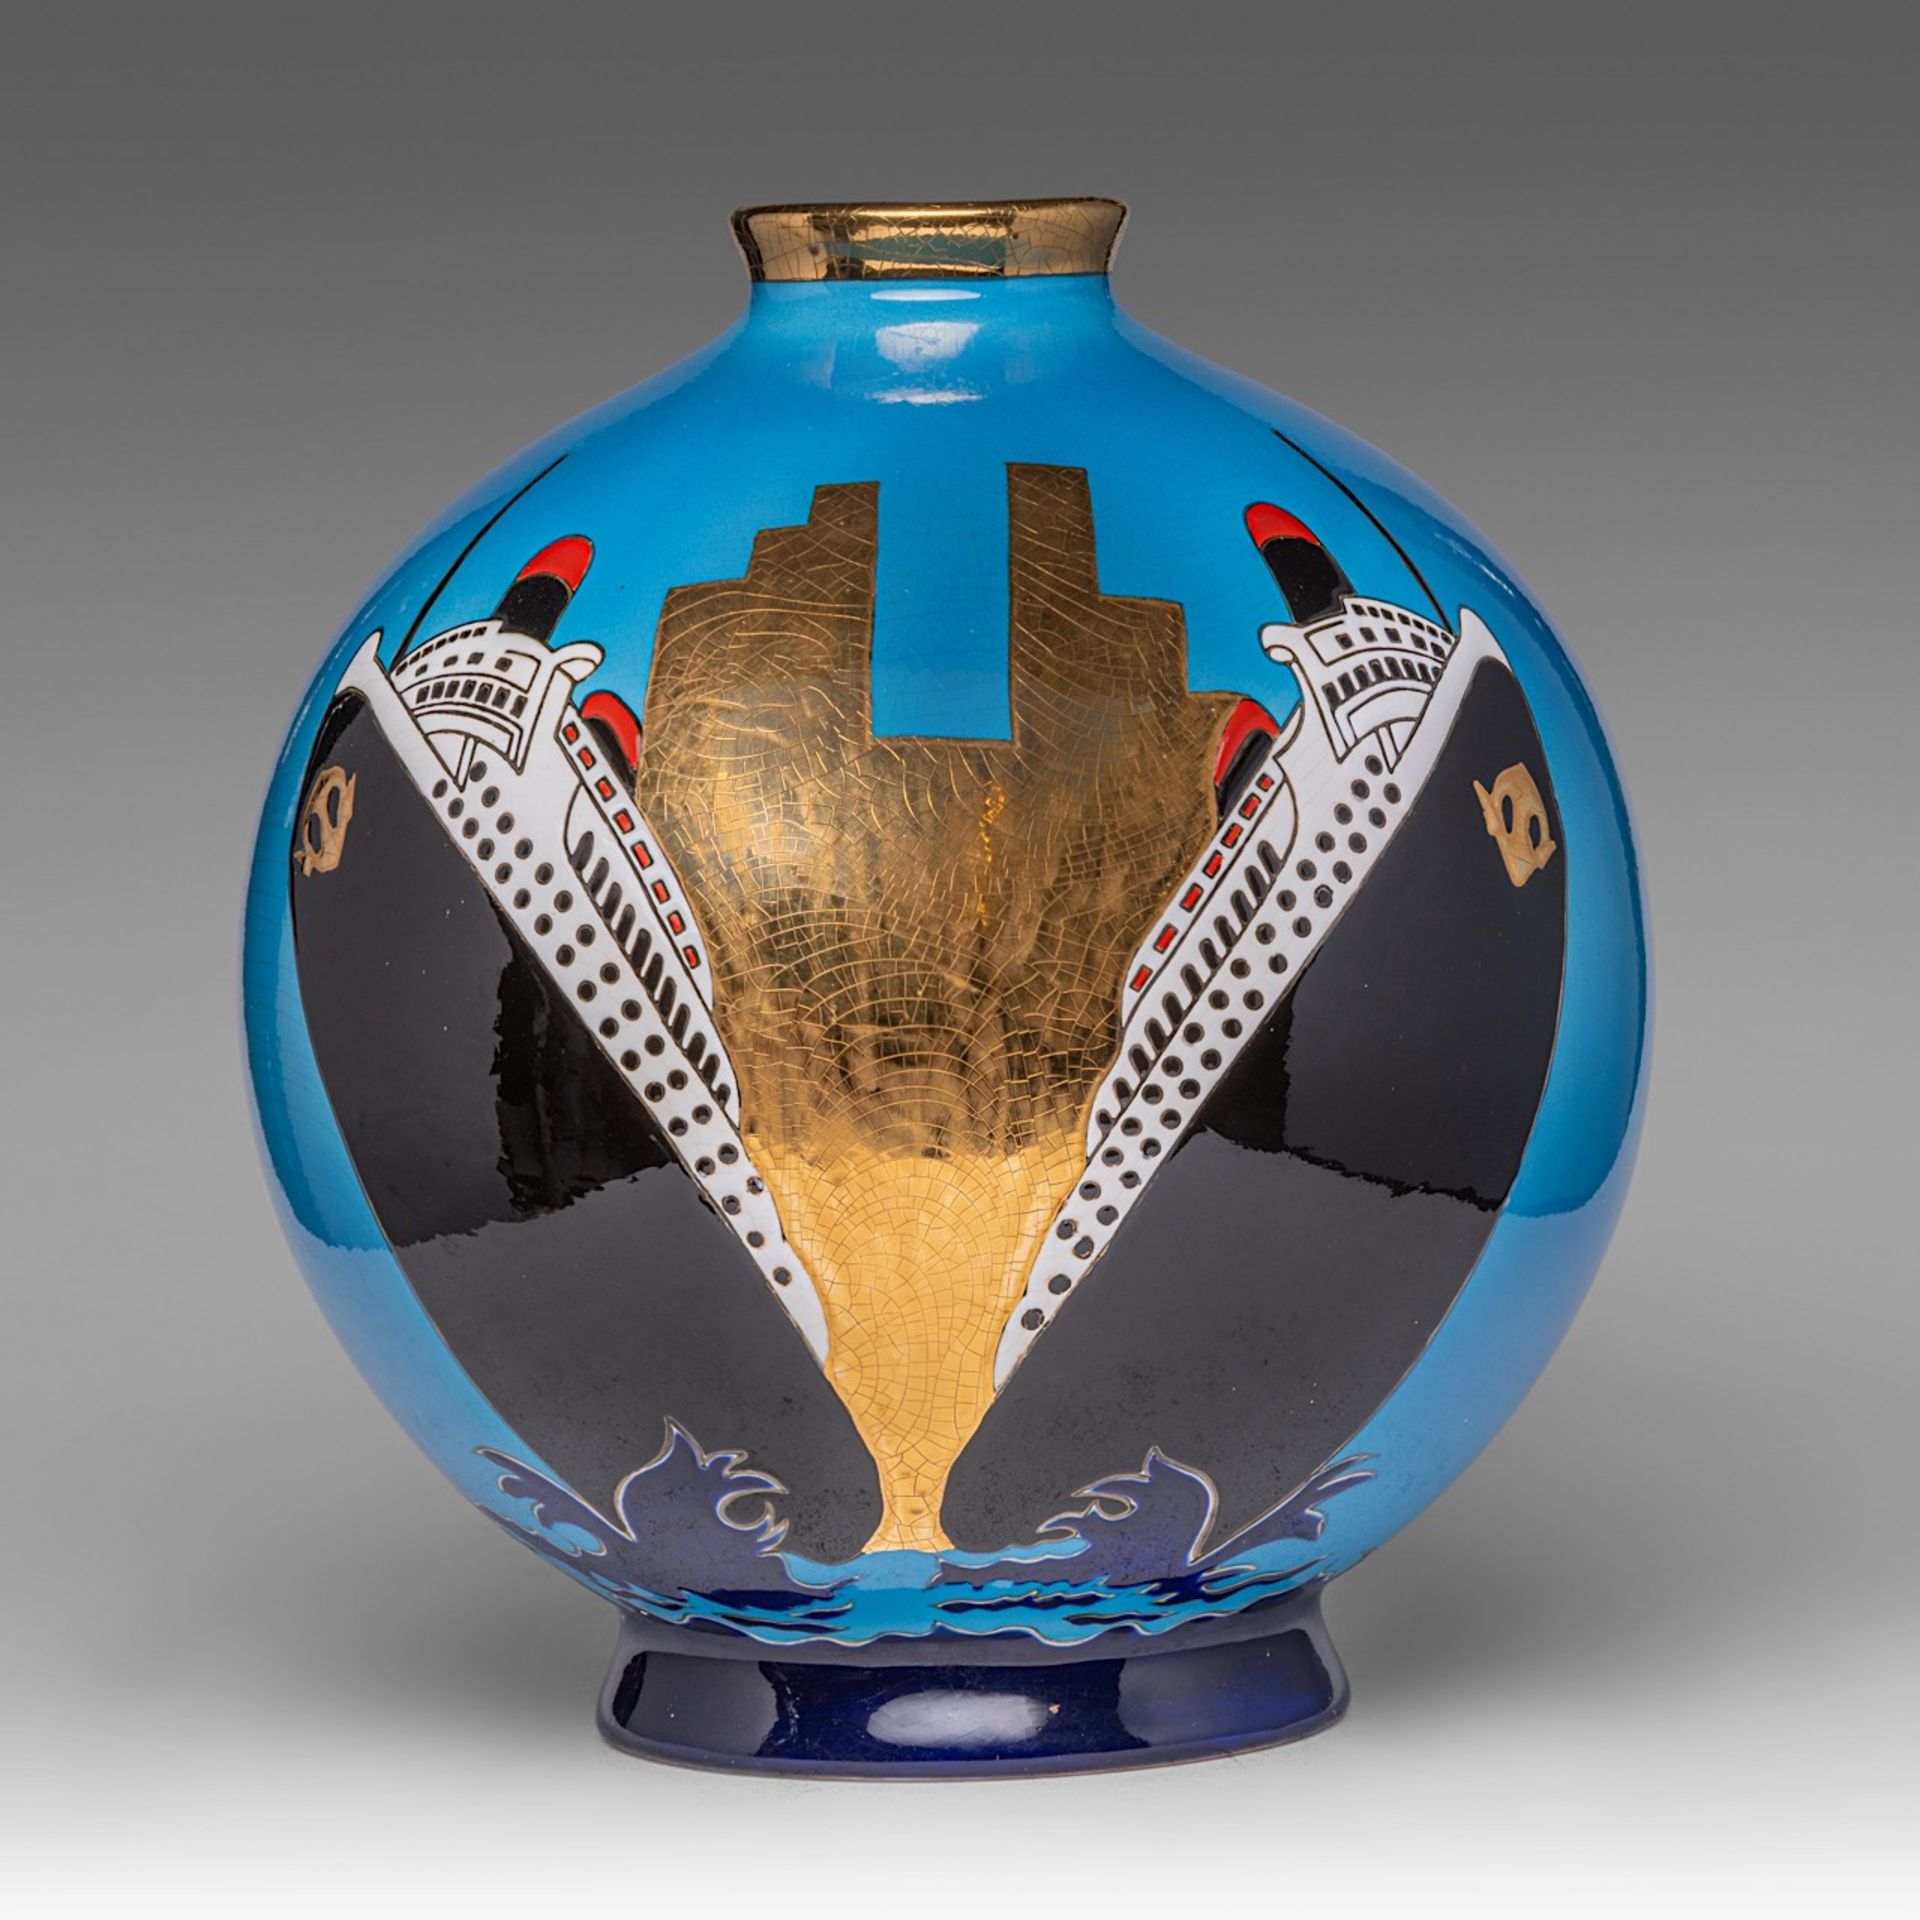 A large 'New York' circular vase by Longwy, limited edition, Ndeg 29/50, H 40 cm